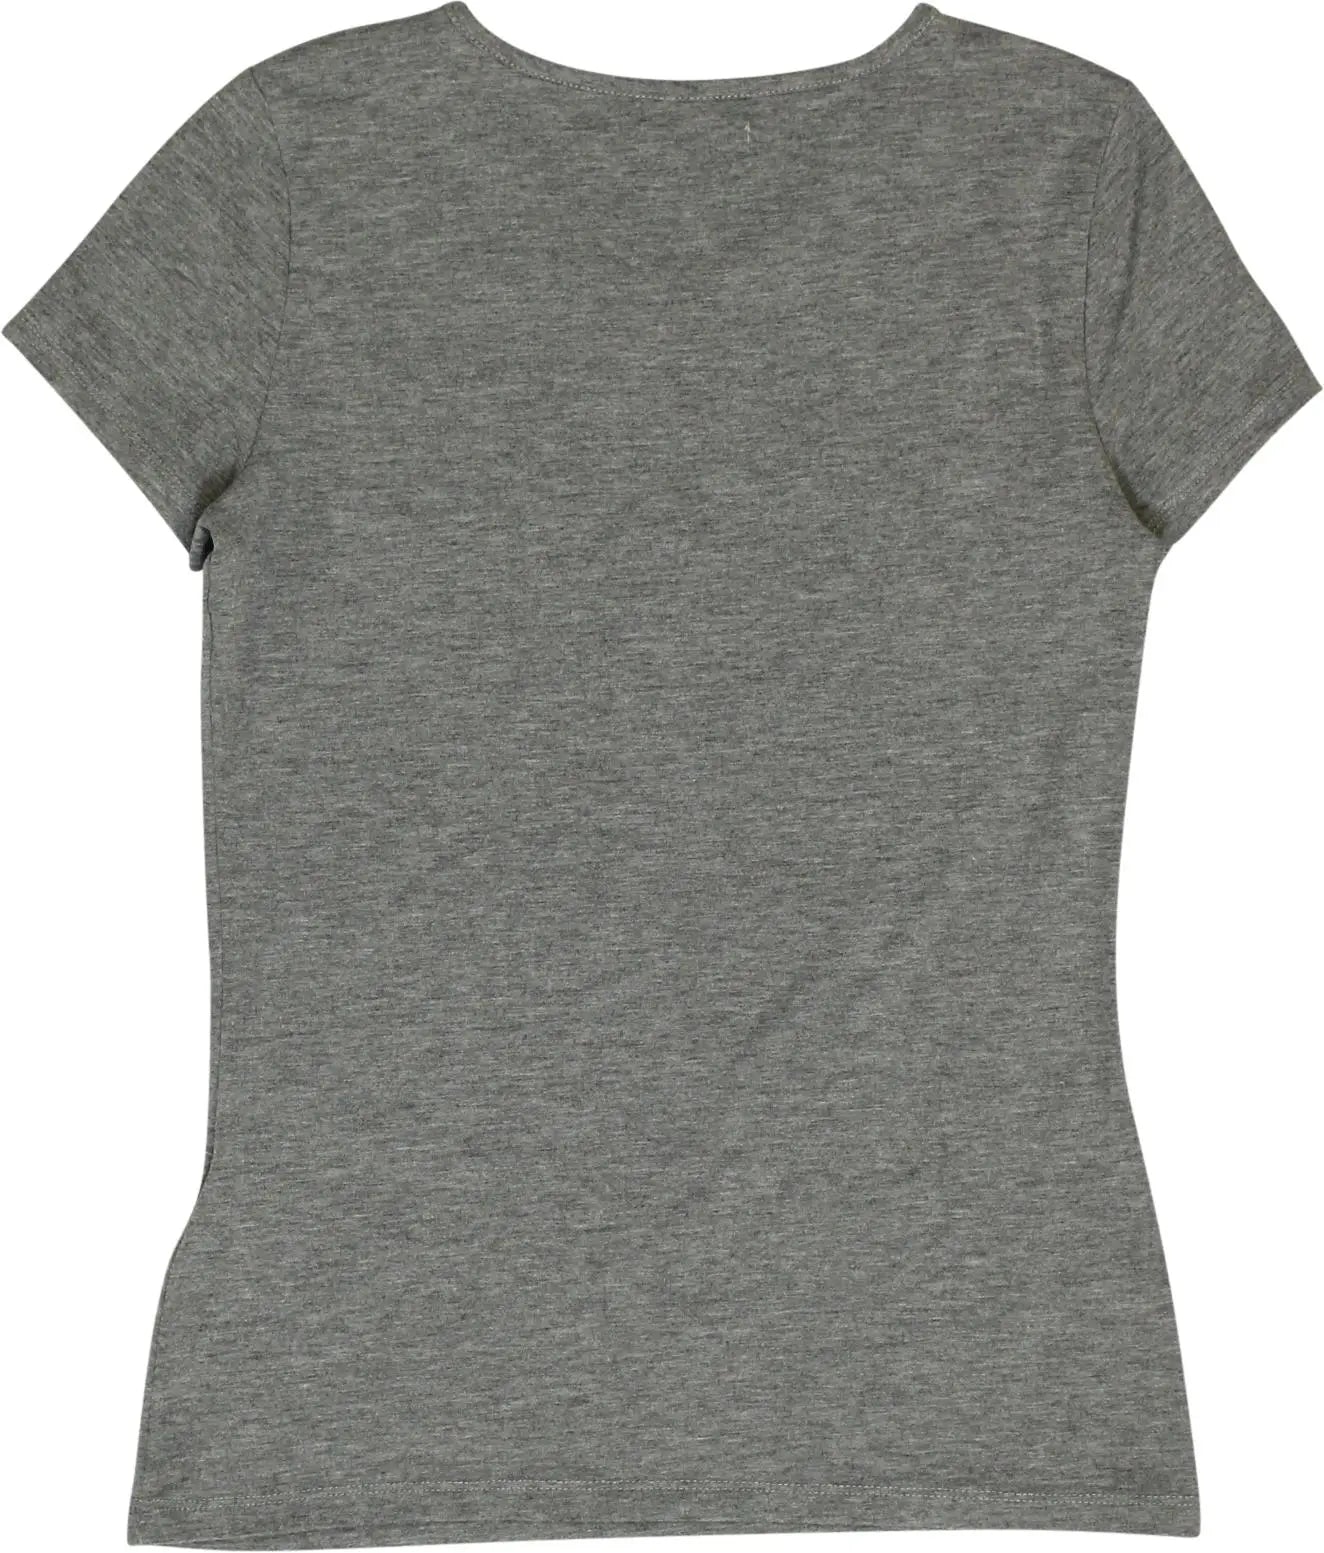 Supertrash - Grey T-shirt- ThriftTale.com - Vintage and second handclothing